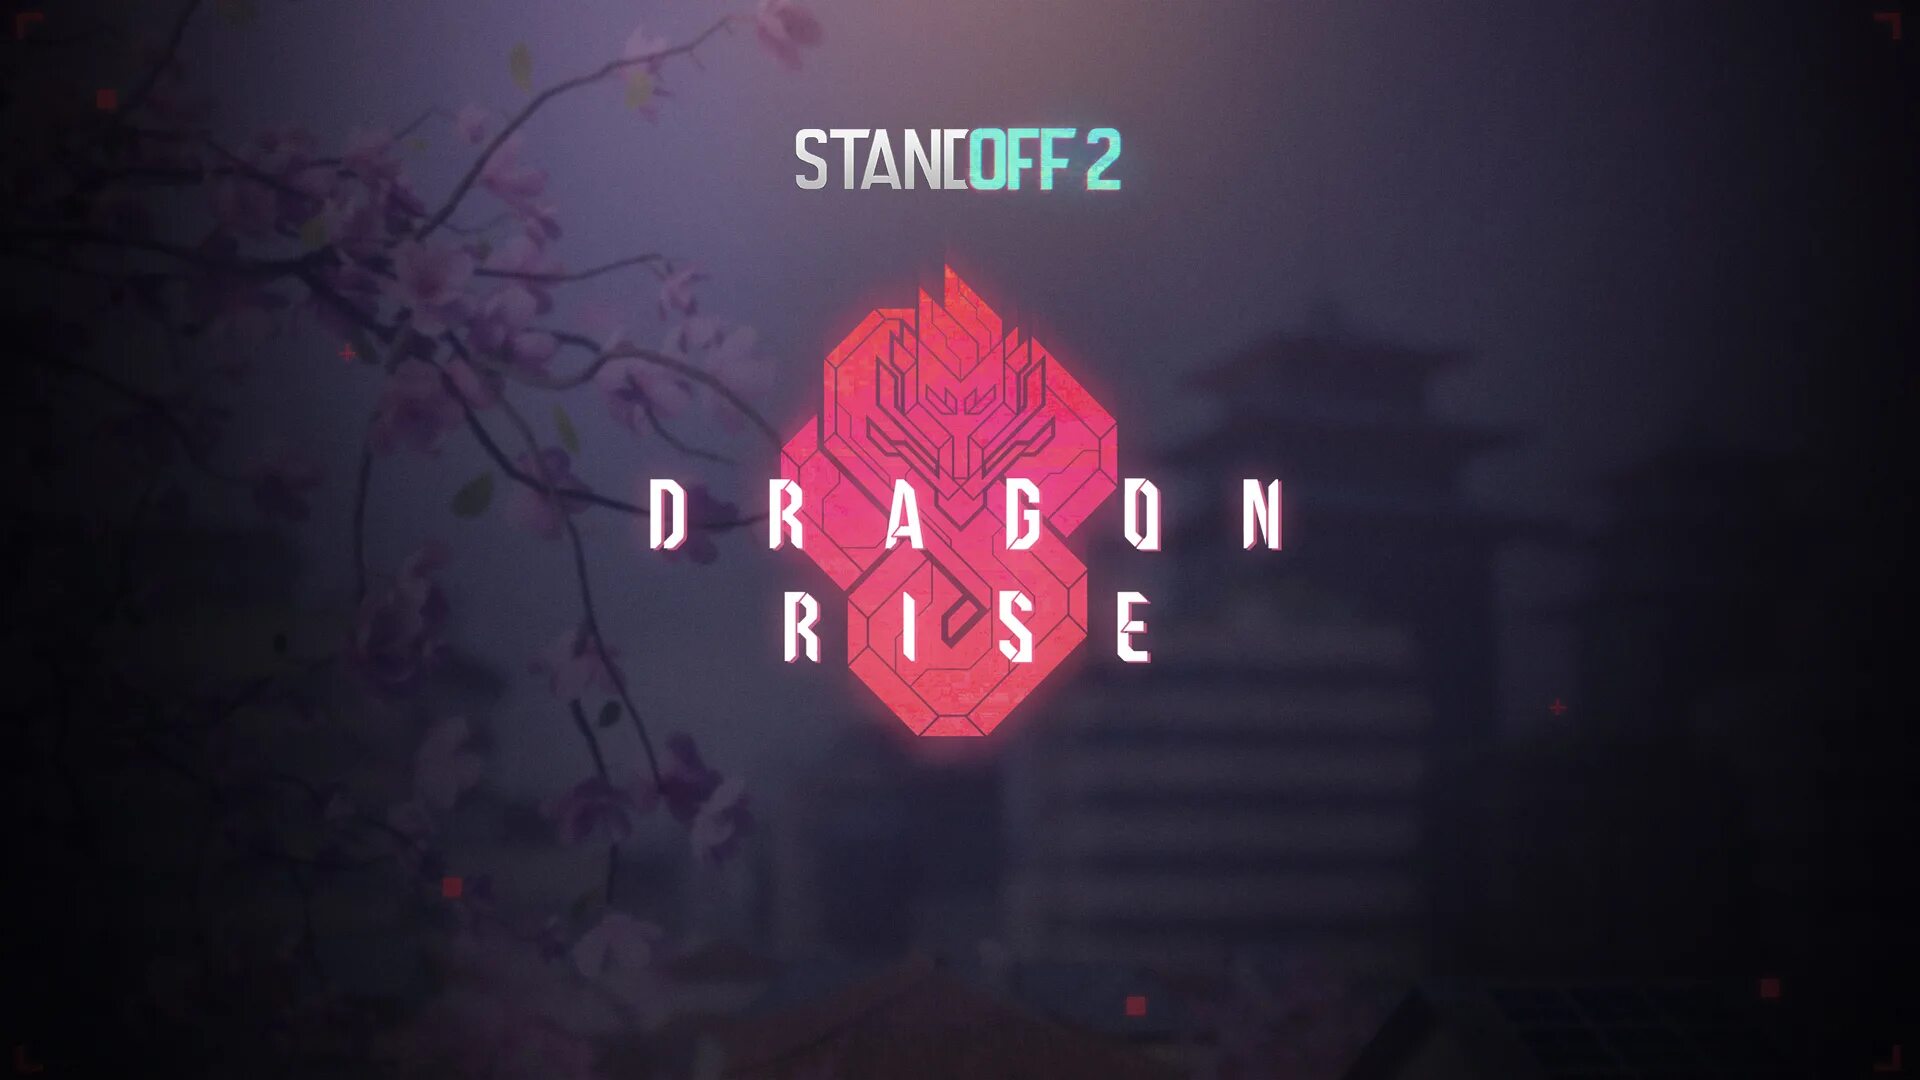 Медали Standoff 2 Dragon Rise. Стандофф 0.23.0. Dragon Rise Standoff 2. Включи standoff 2 0.28